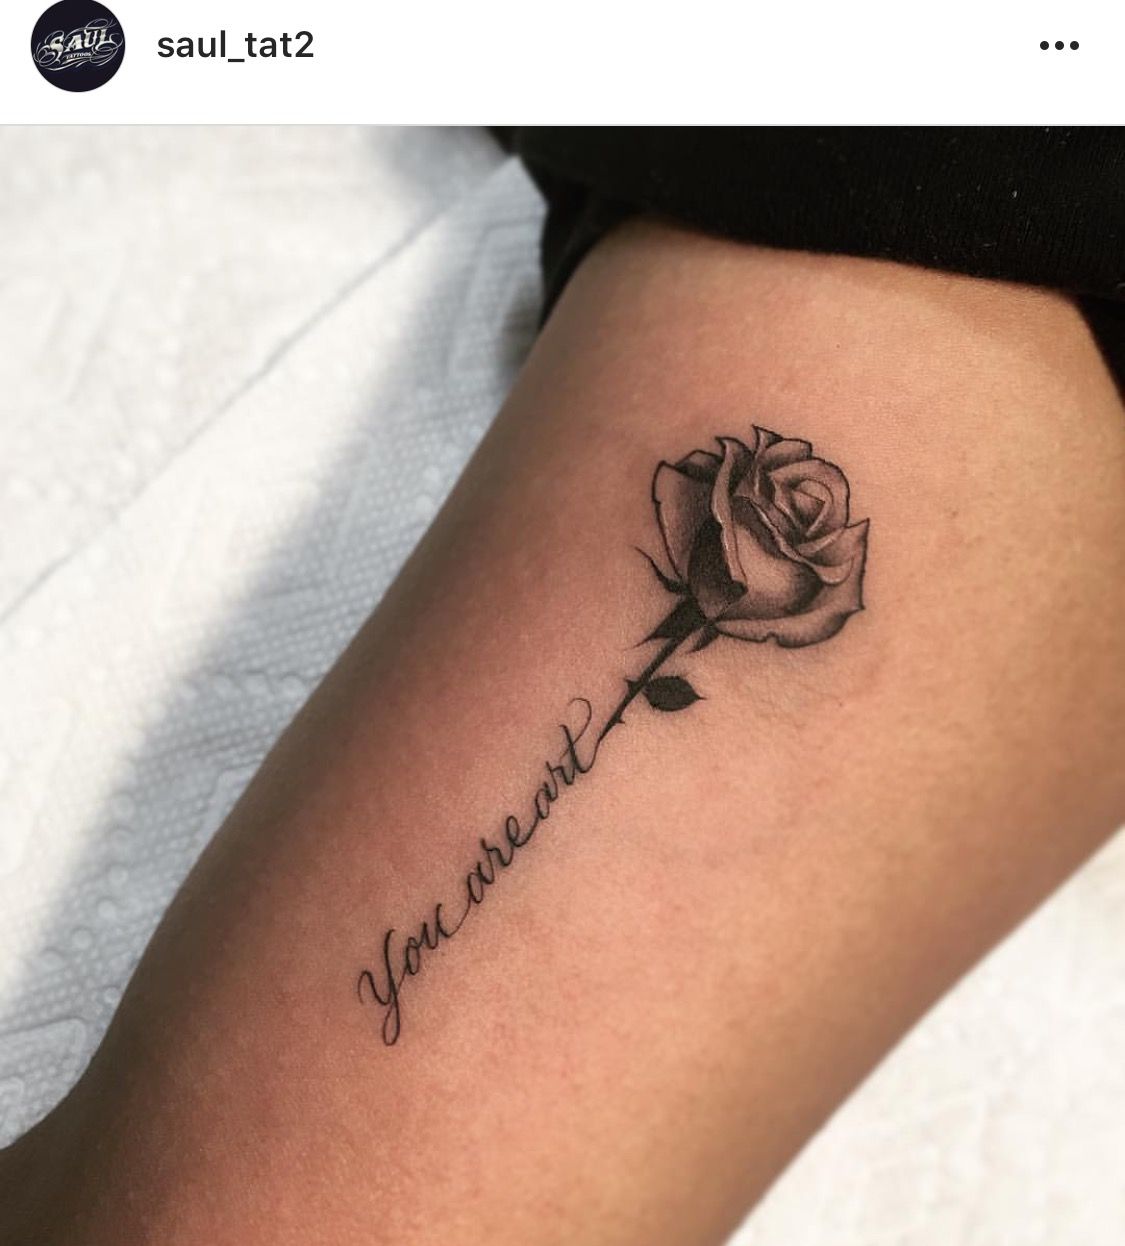 Black shaded small rose tattoo on inner forearm